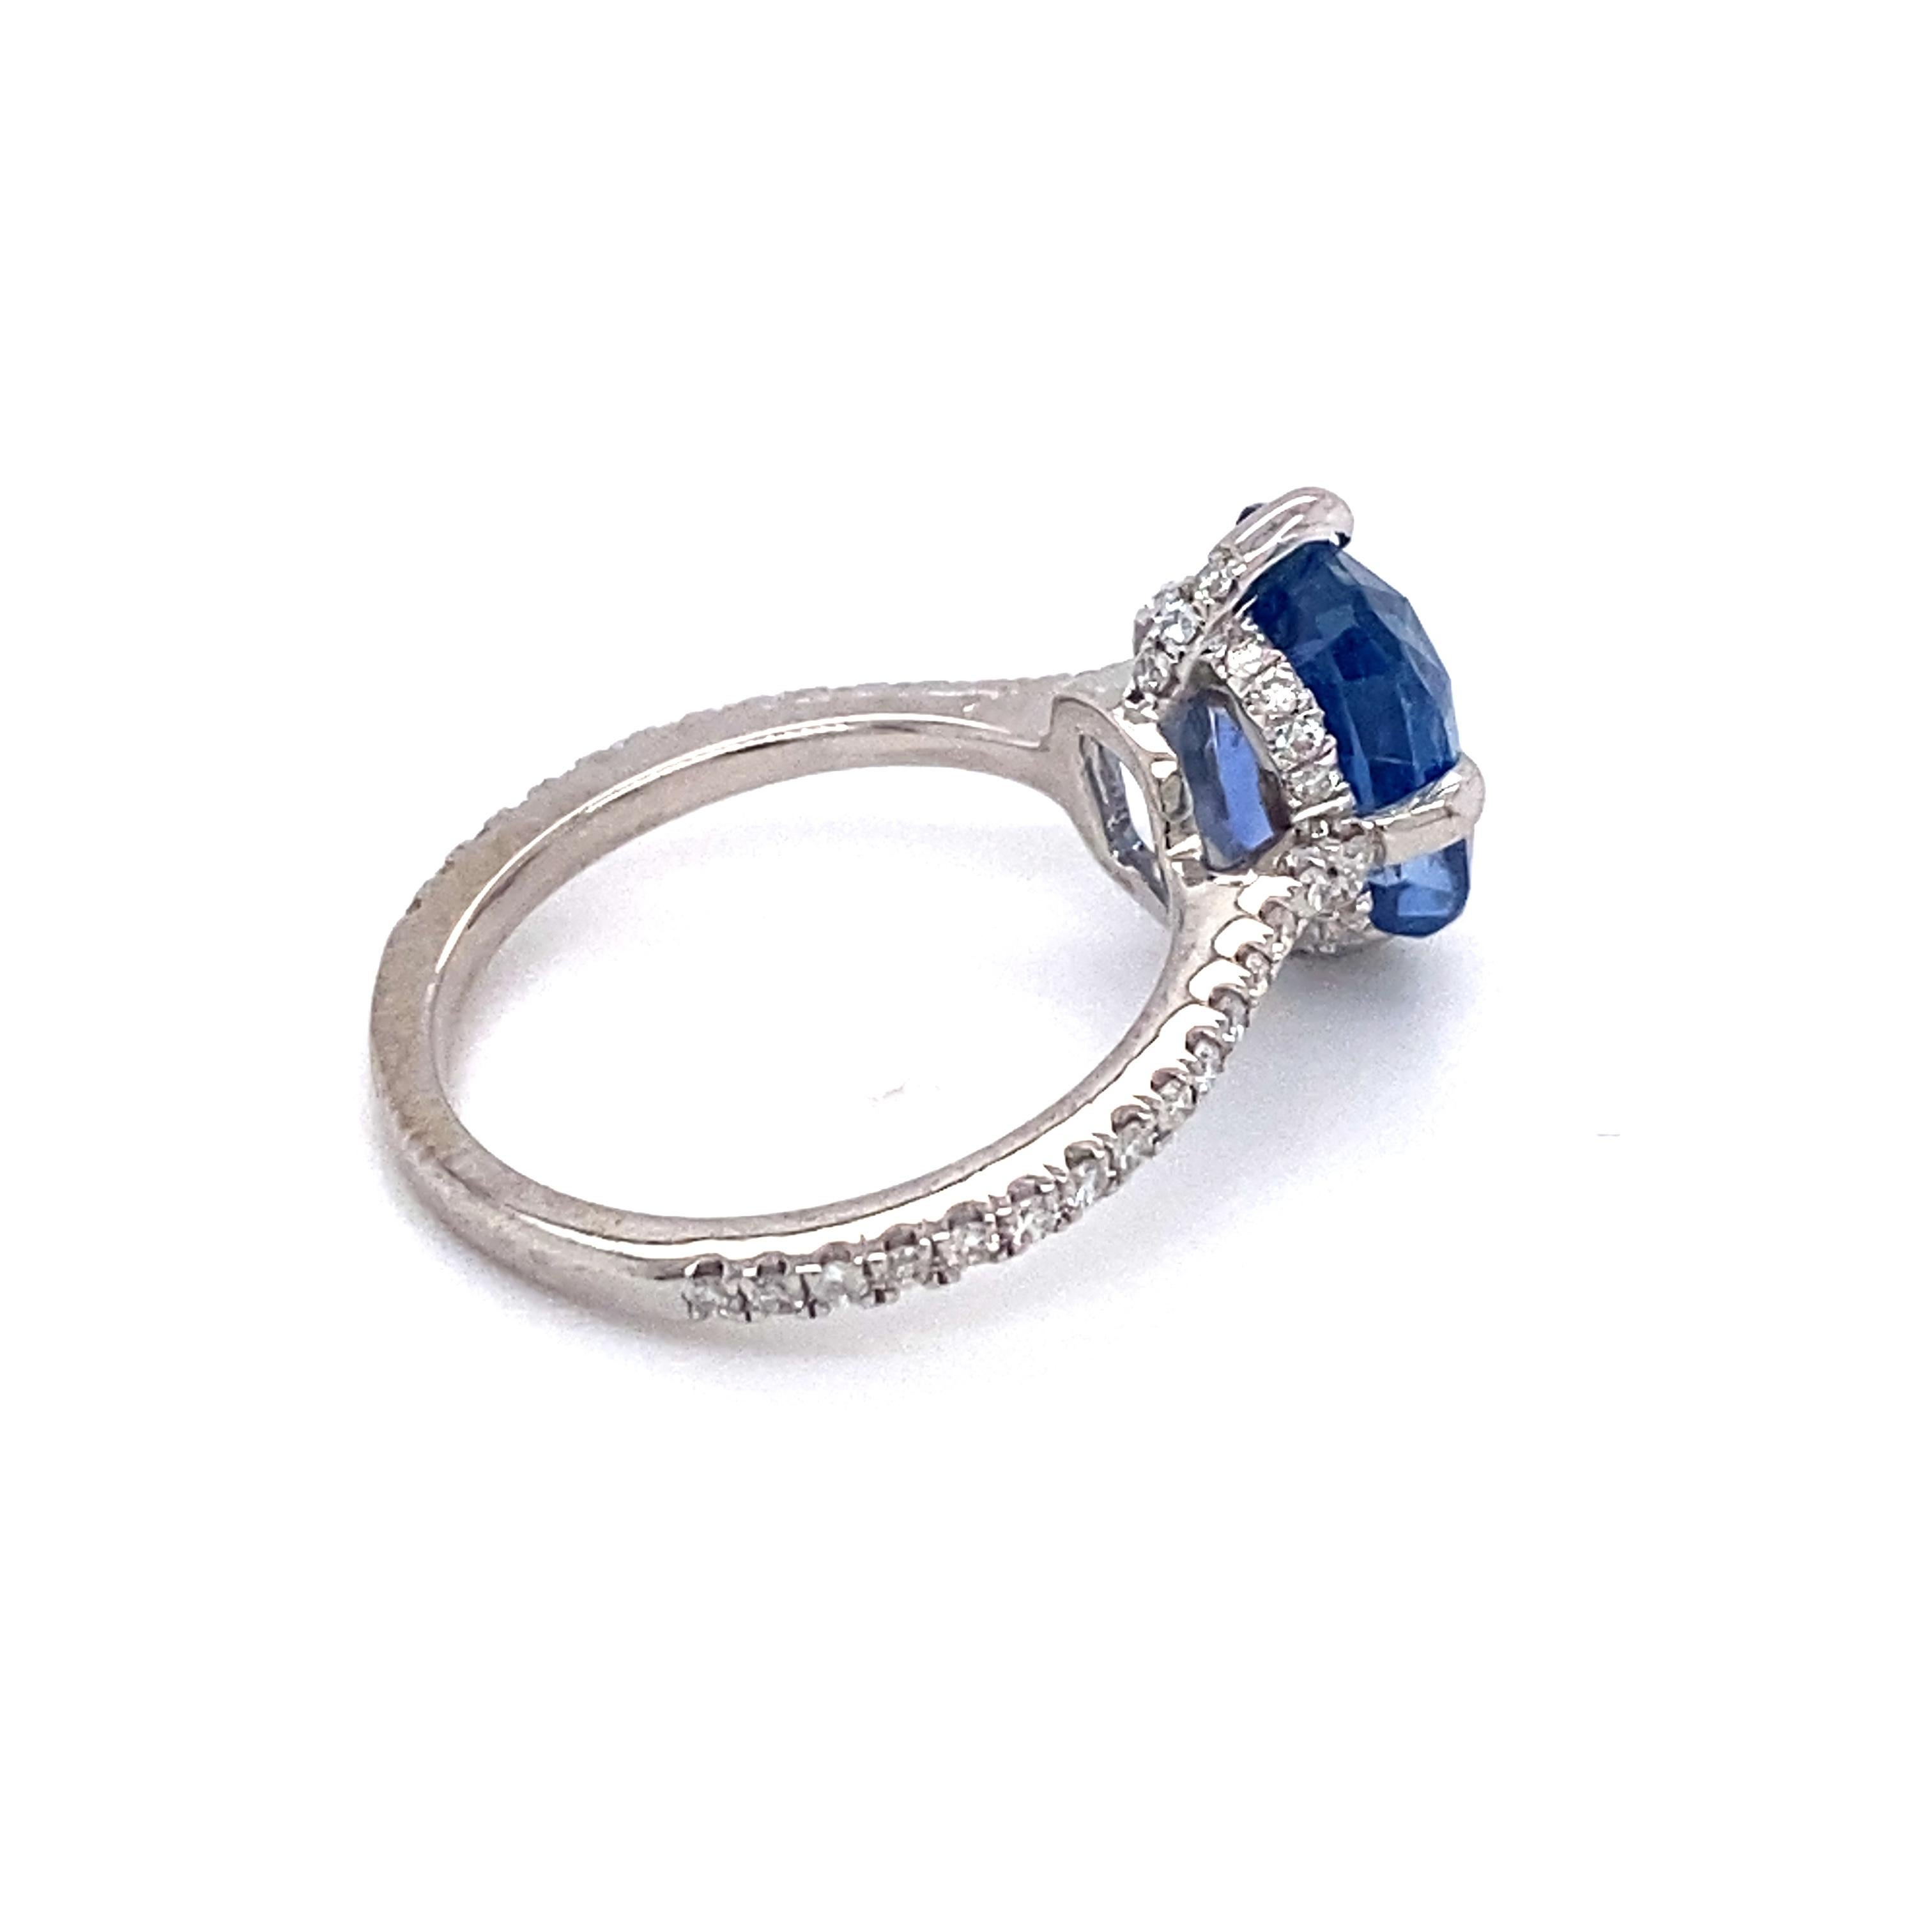 Modern 3.50 Carat Ceylon Sapphire and 0.40 Carat Diamond Ring in 14 Karat White Gold